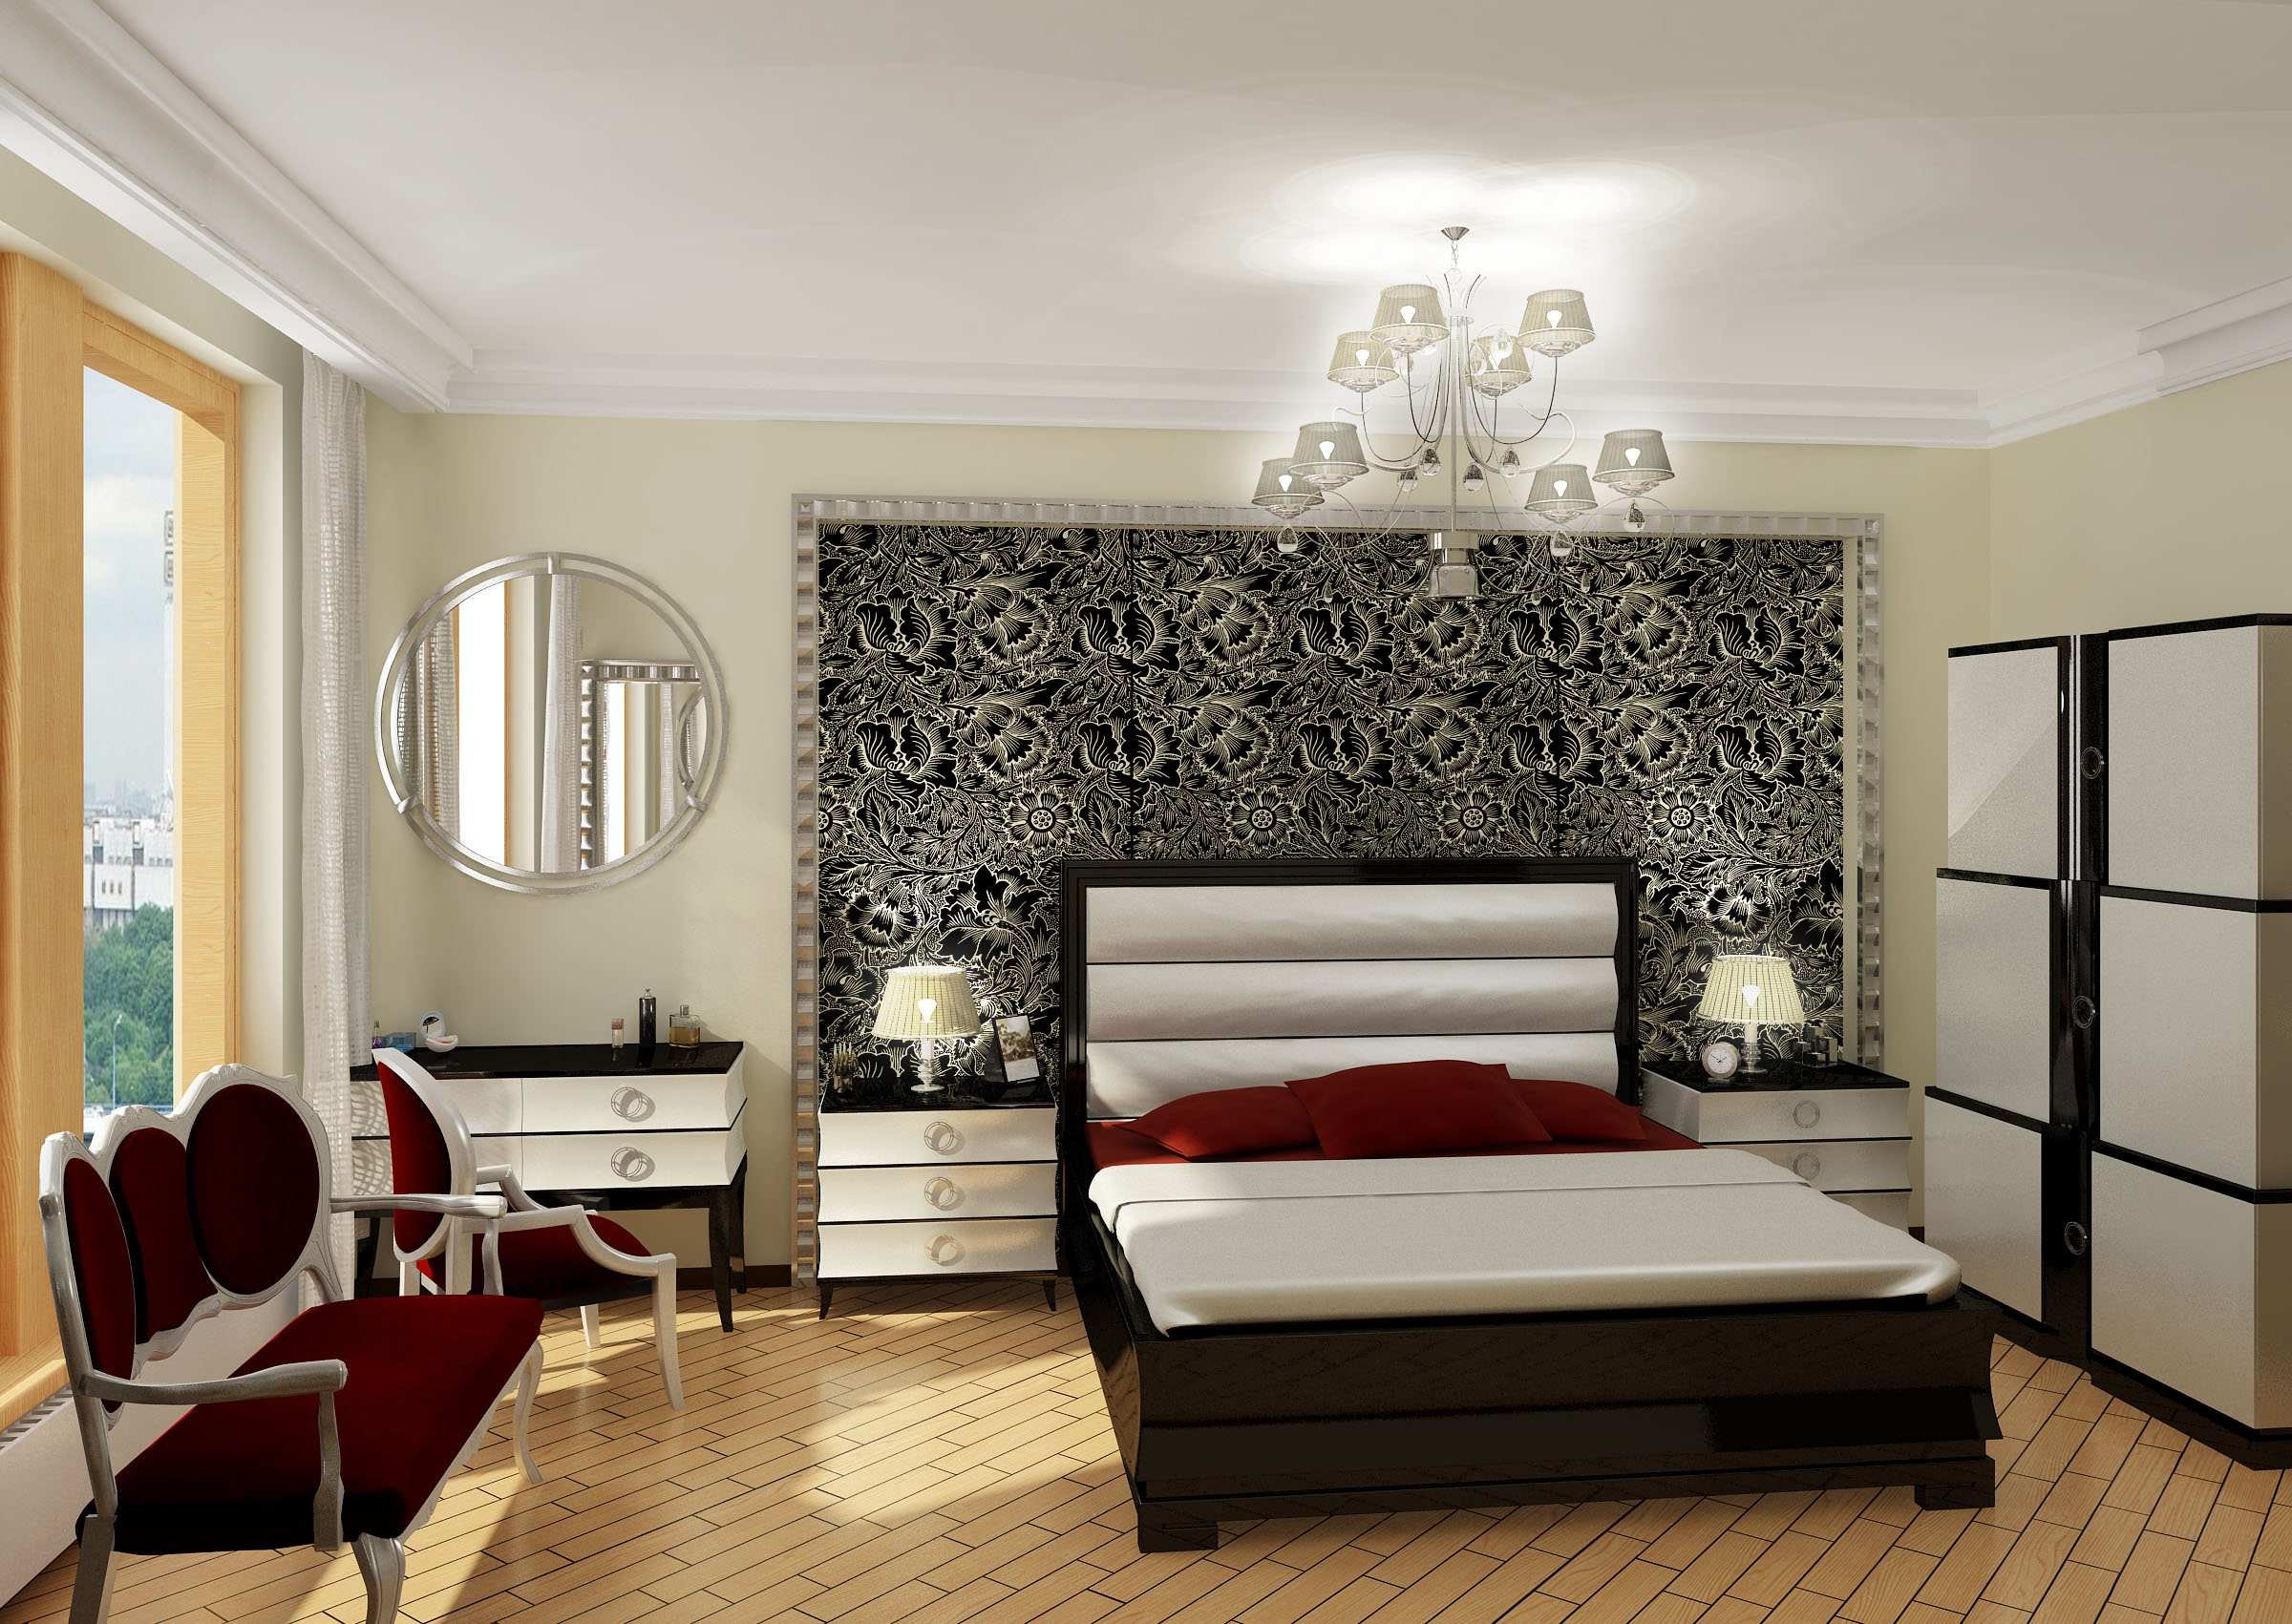 wallpaper for house interior,bedroom,room,furniture,interior design,property